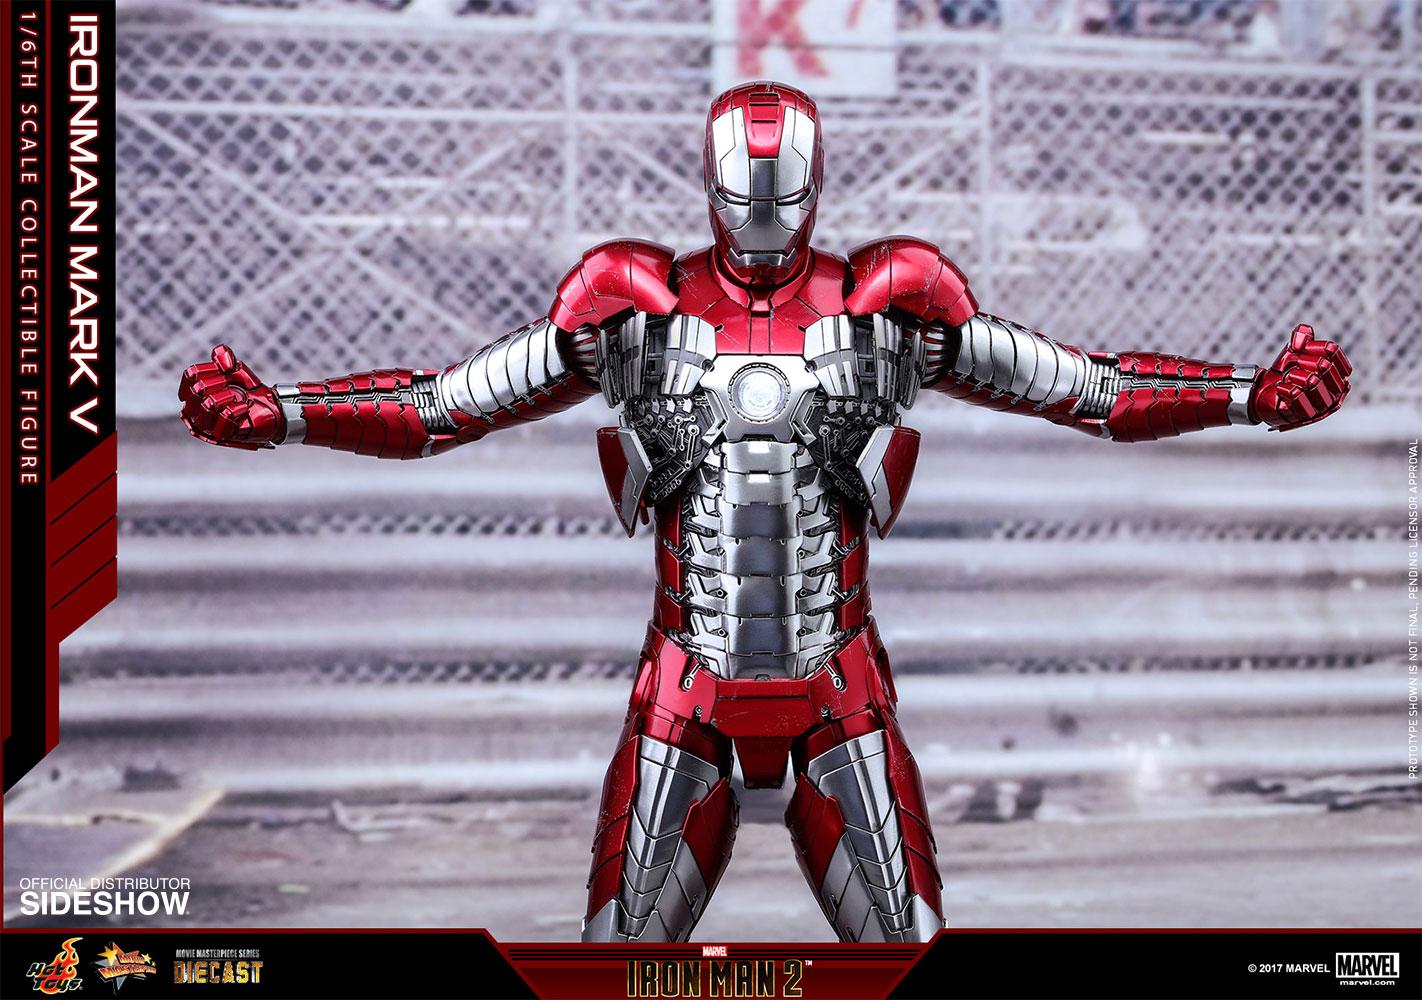 Marvel Iron Man Mark V Sixth Scale Figure by Hot Toys. Sideshow